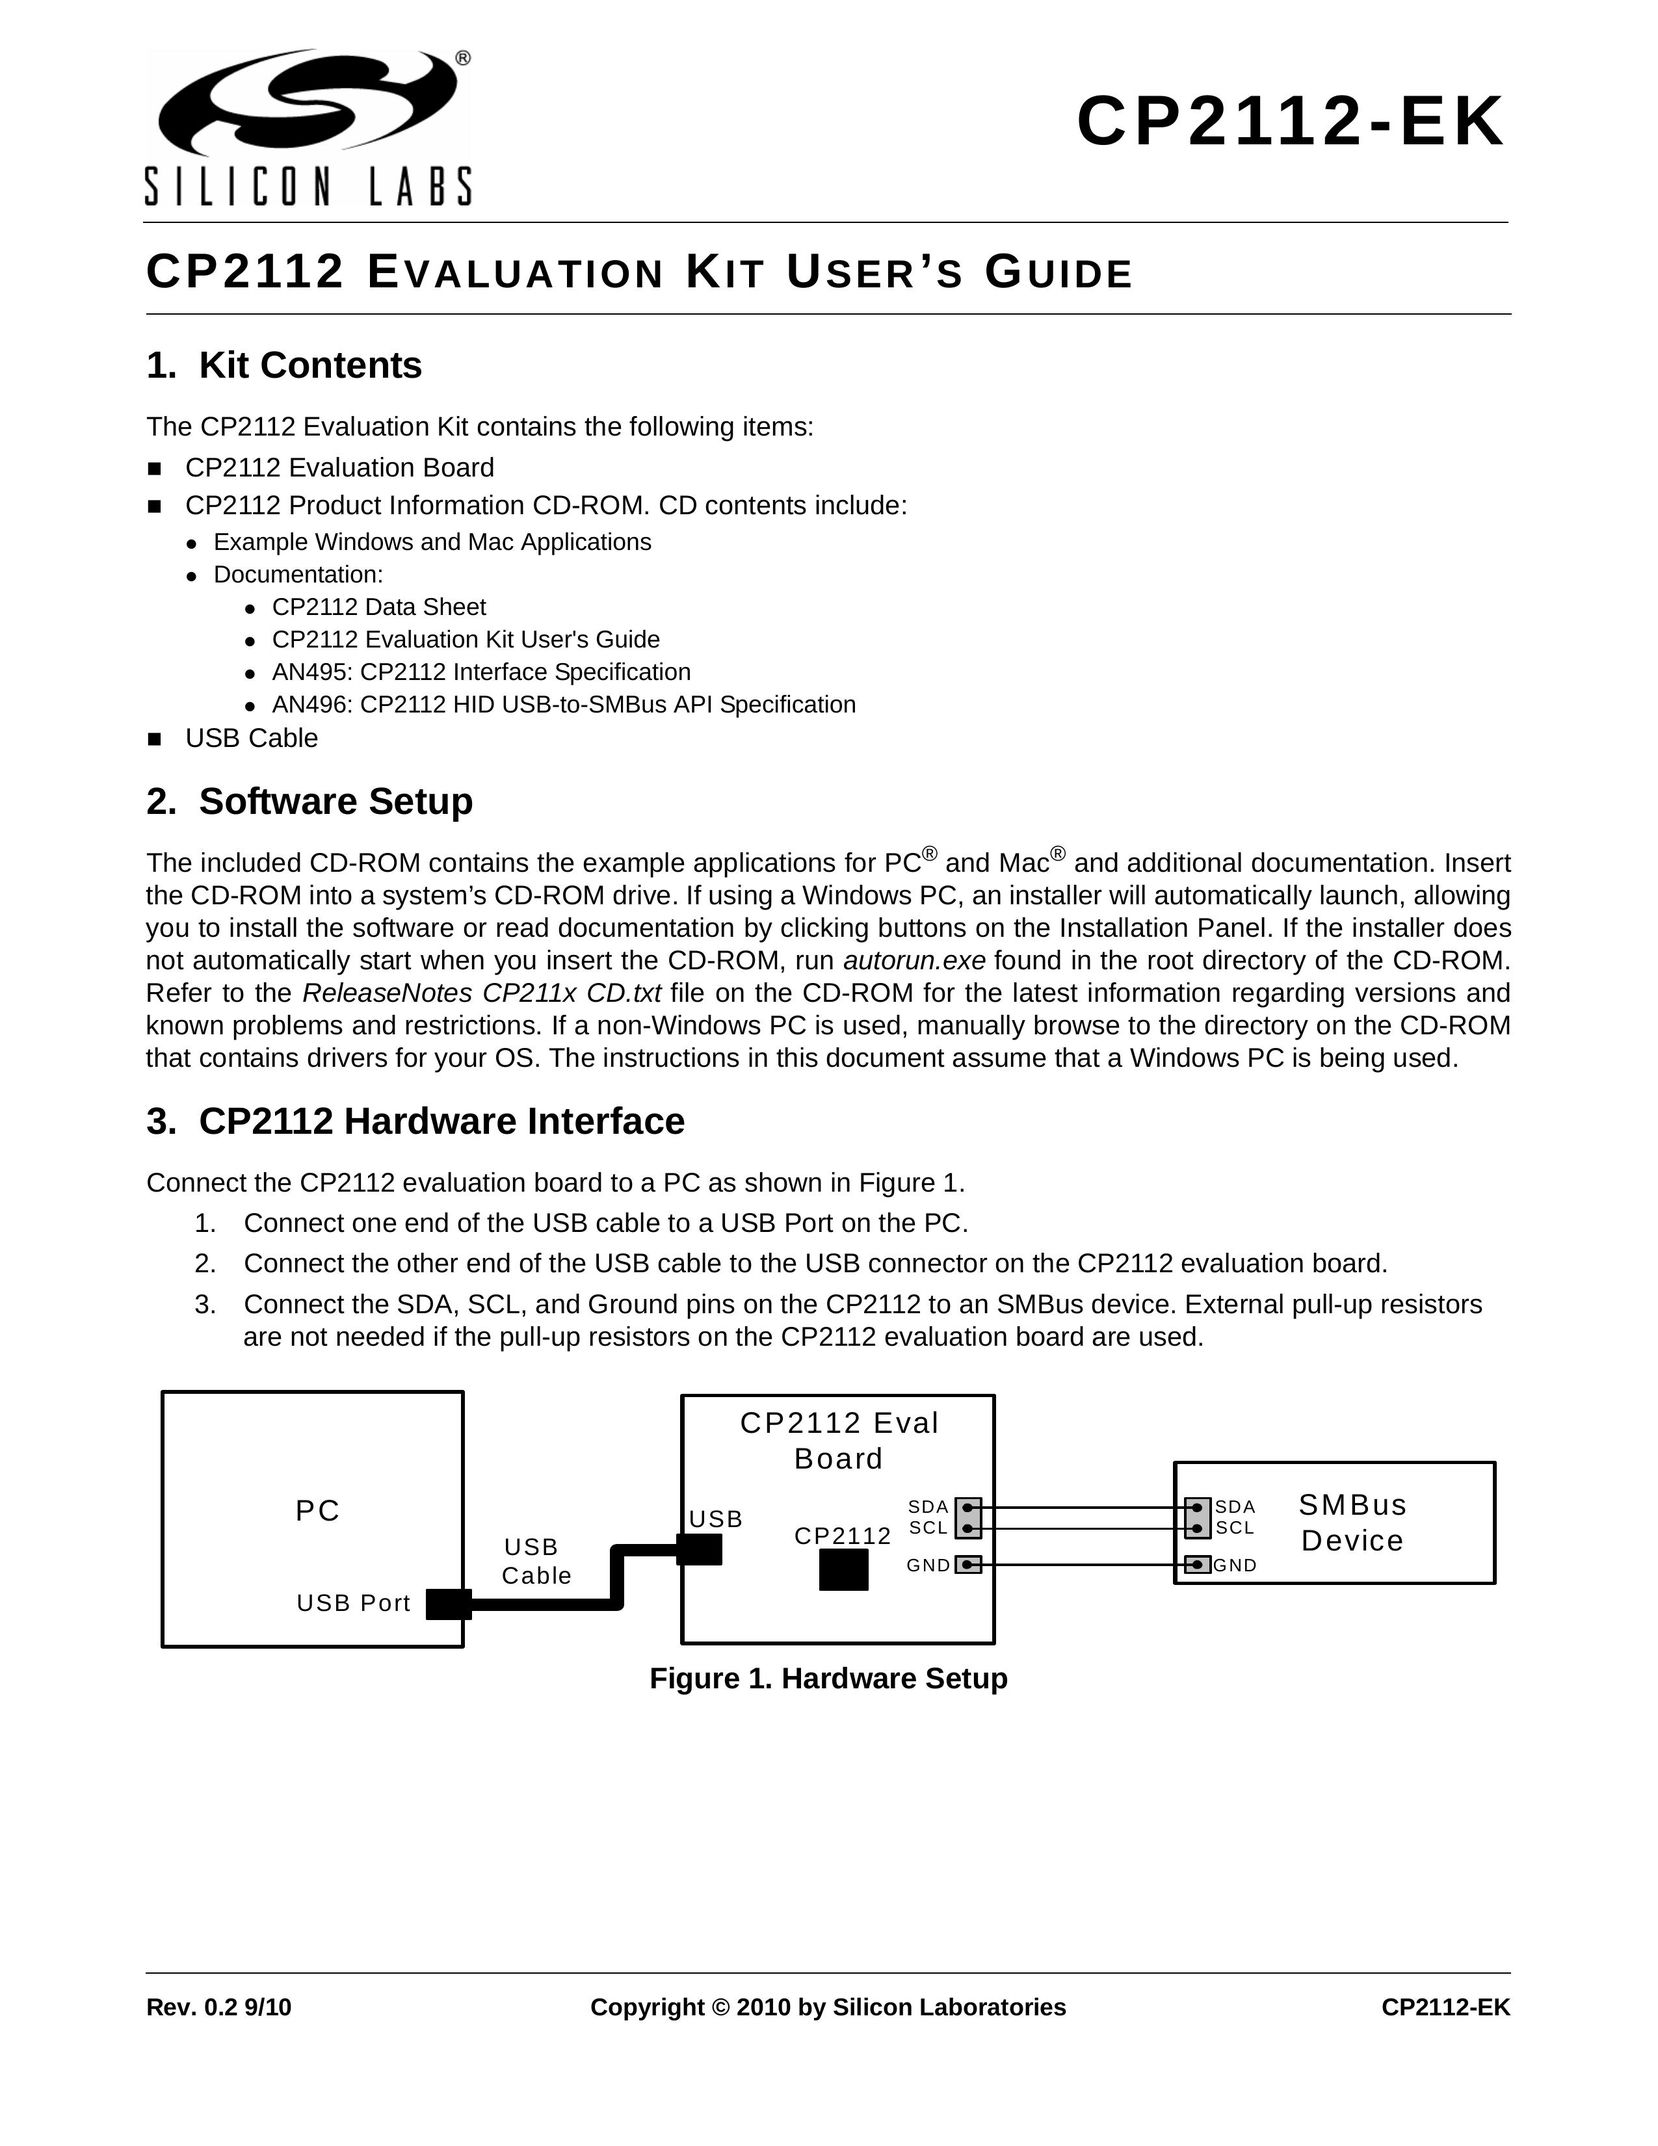 Silicon Laboratories CP2112-EK Computer Hardware User Manual